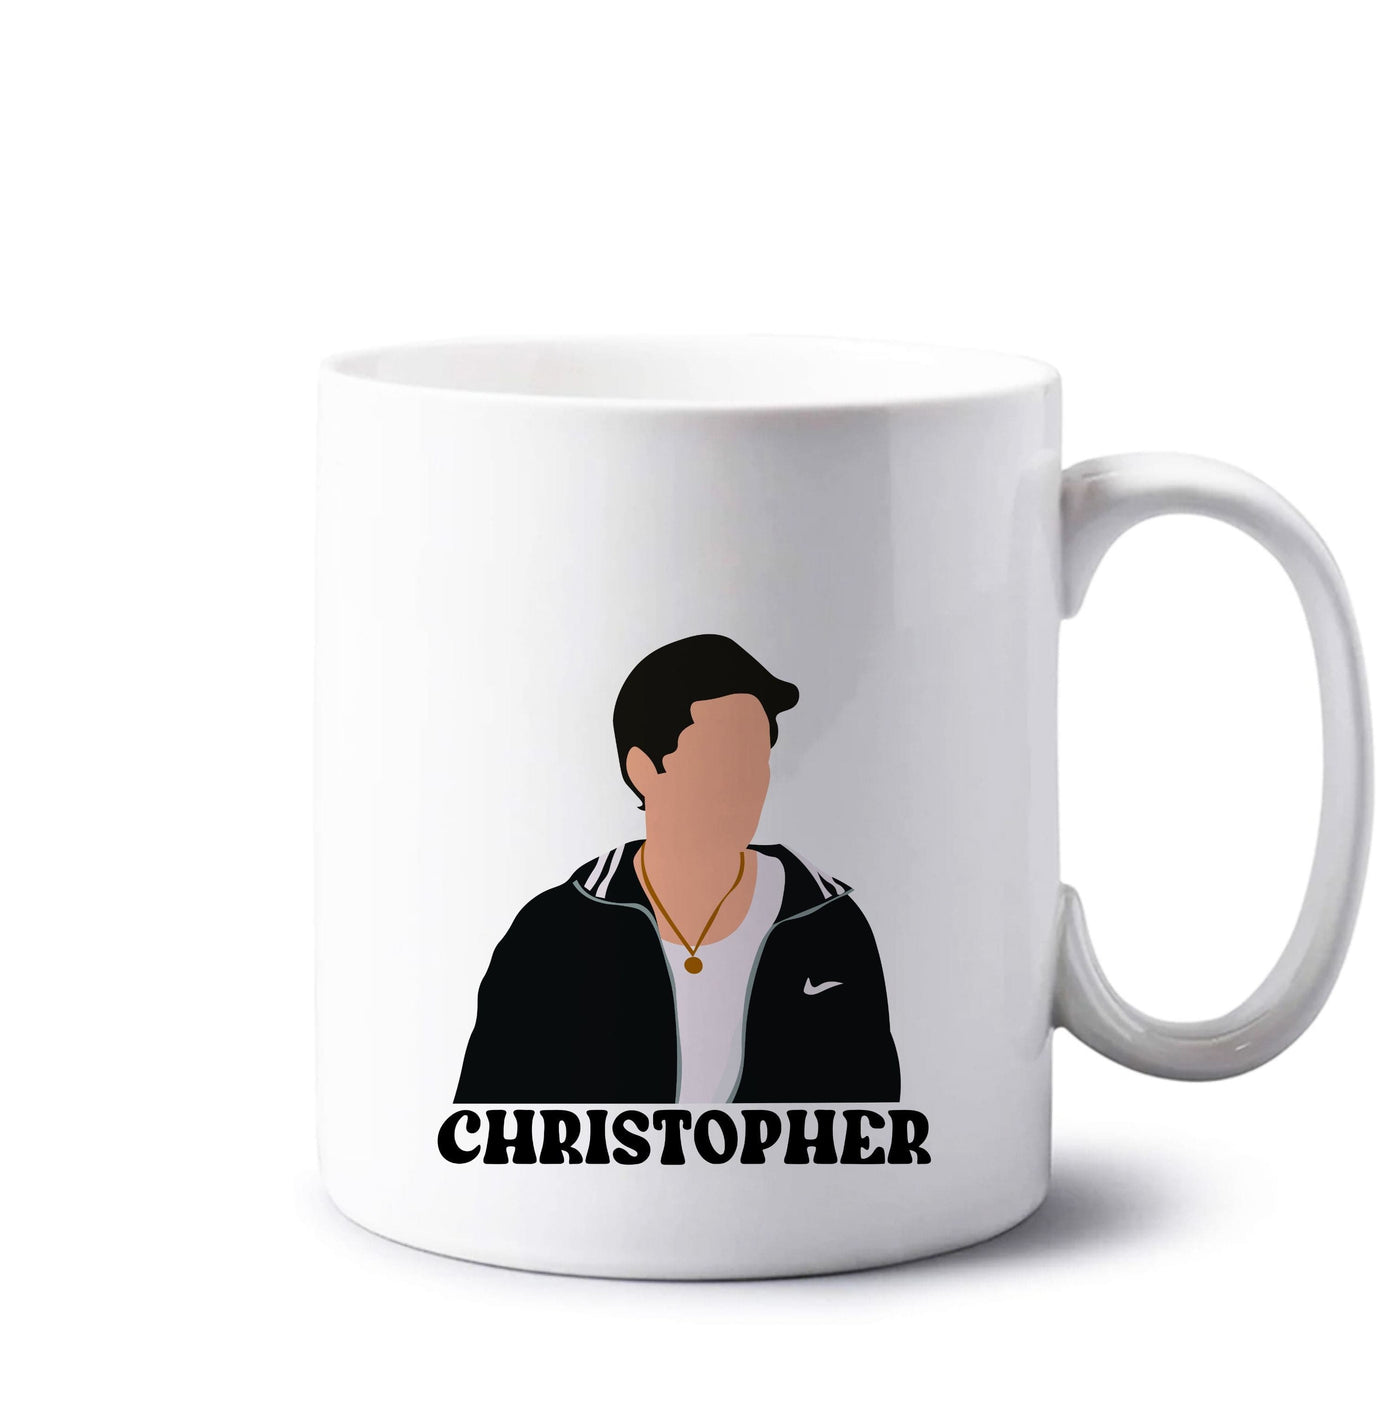 Cristopher - The Sopranos Mug